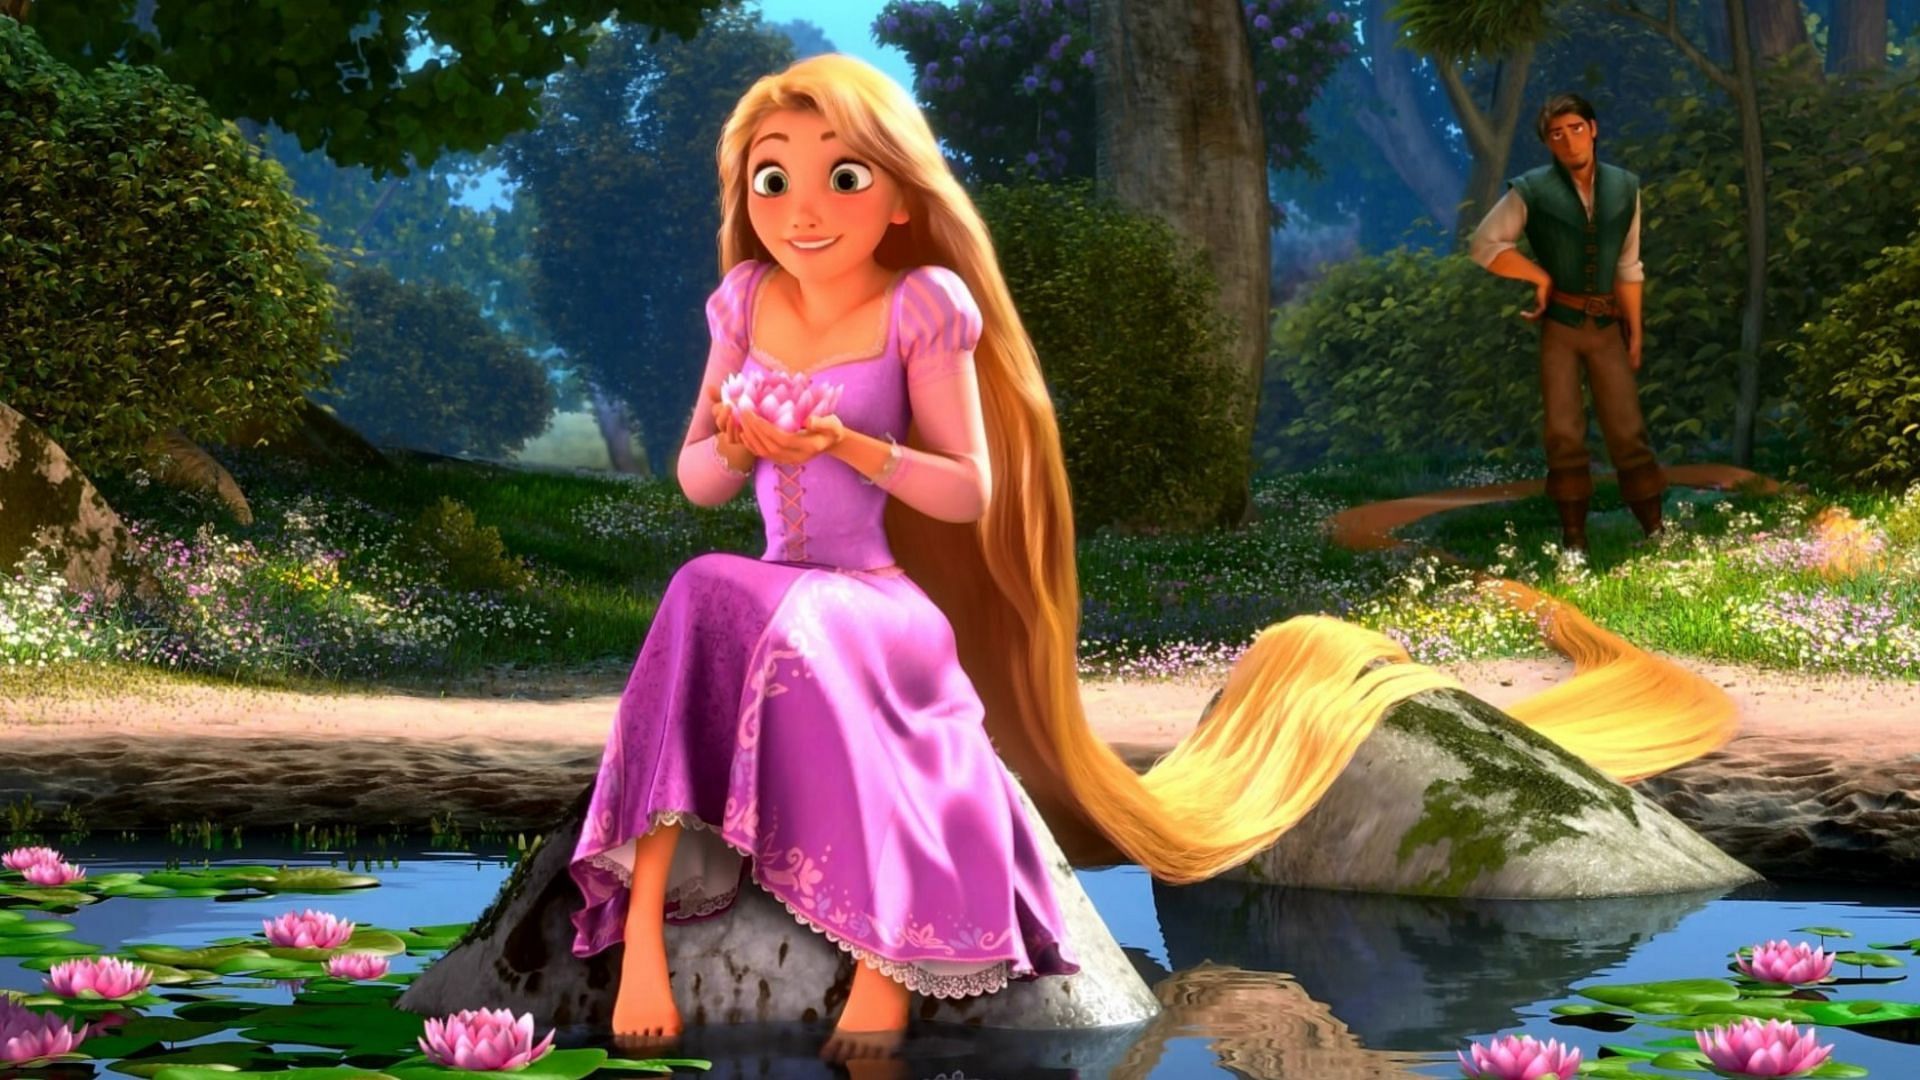 Rapunzel with Eugene in the background (Image via Disney)